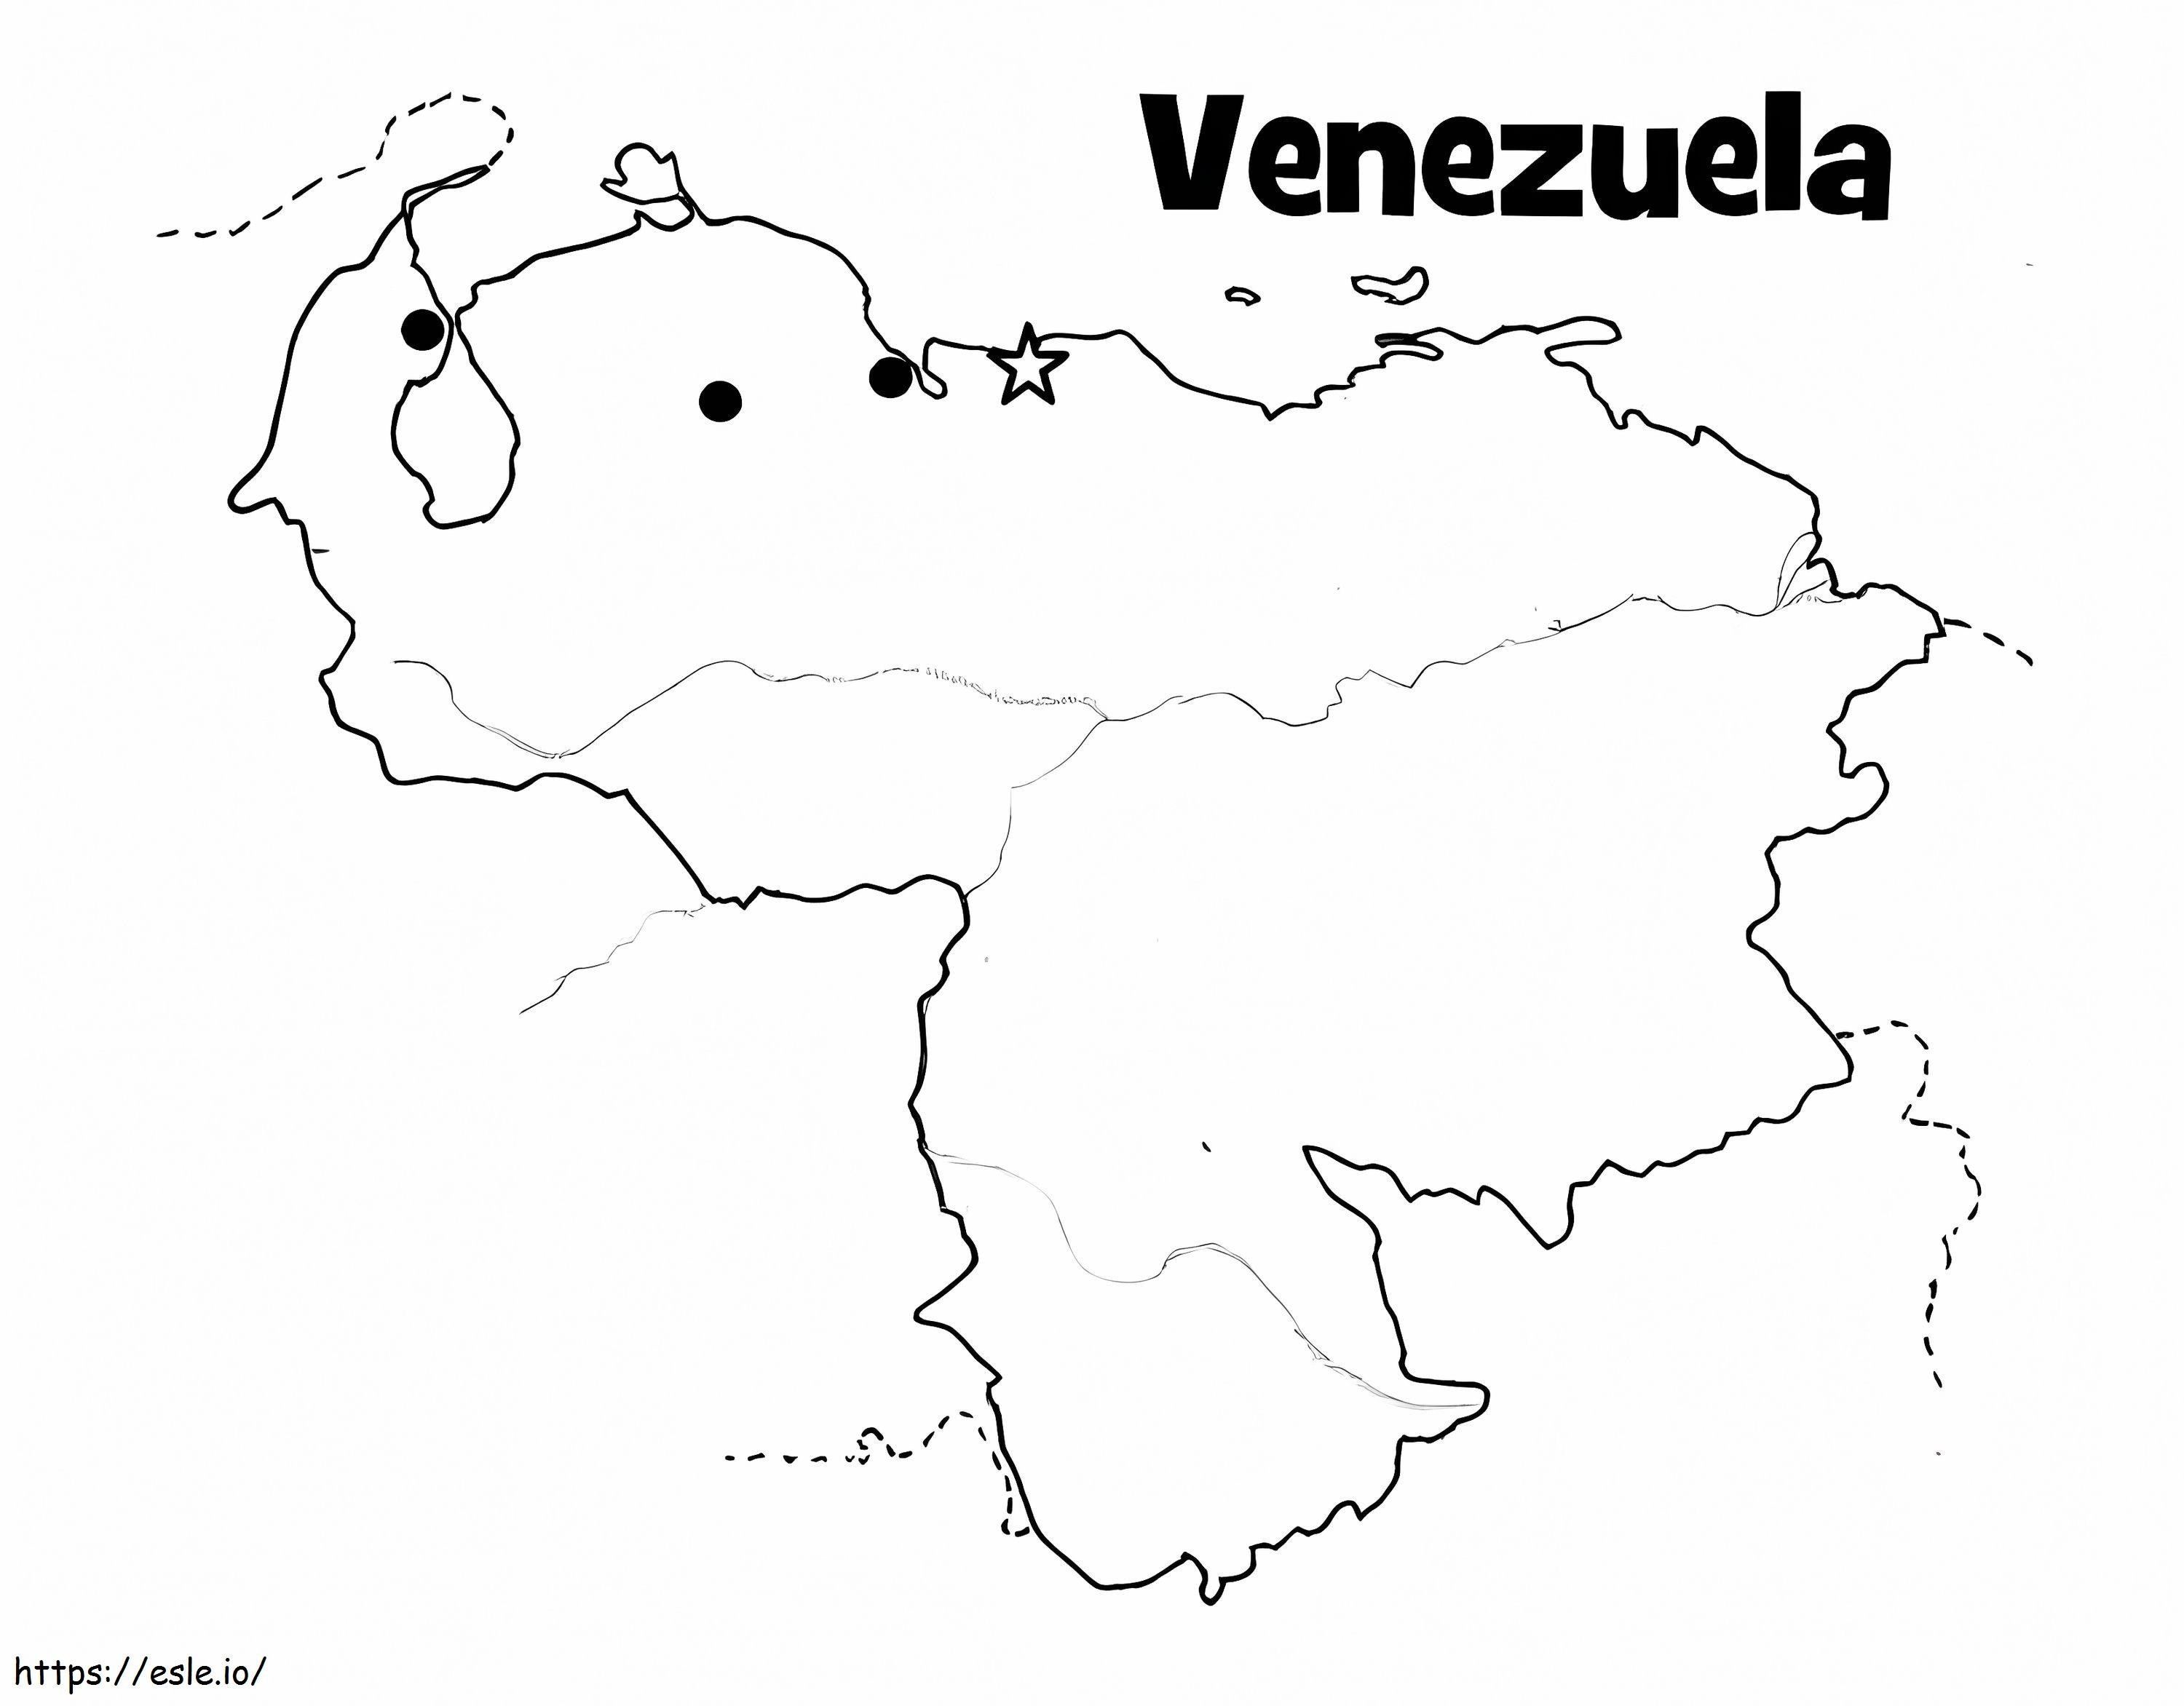 Venezuela Map coloring page